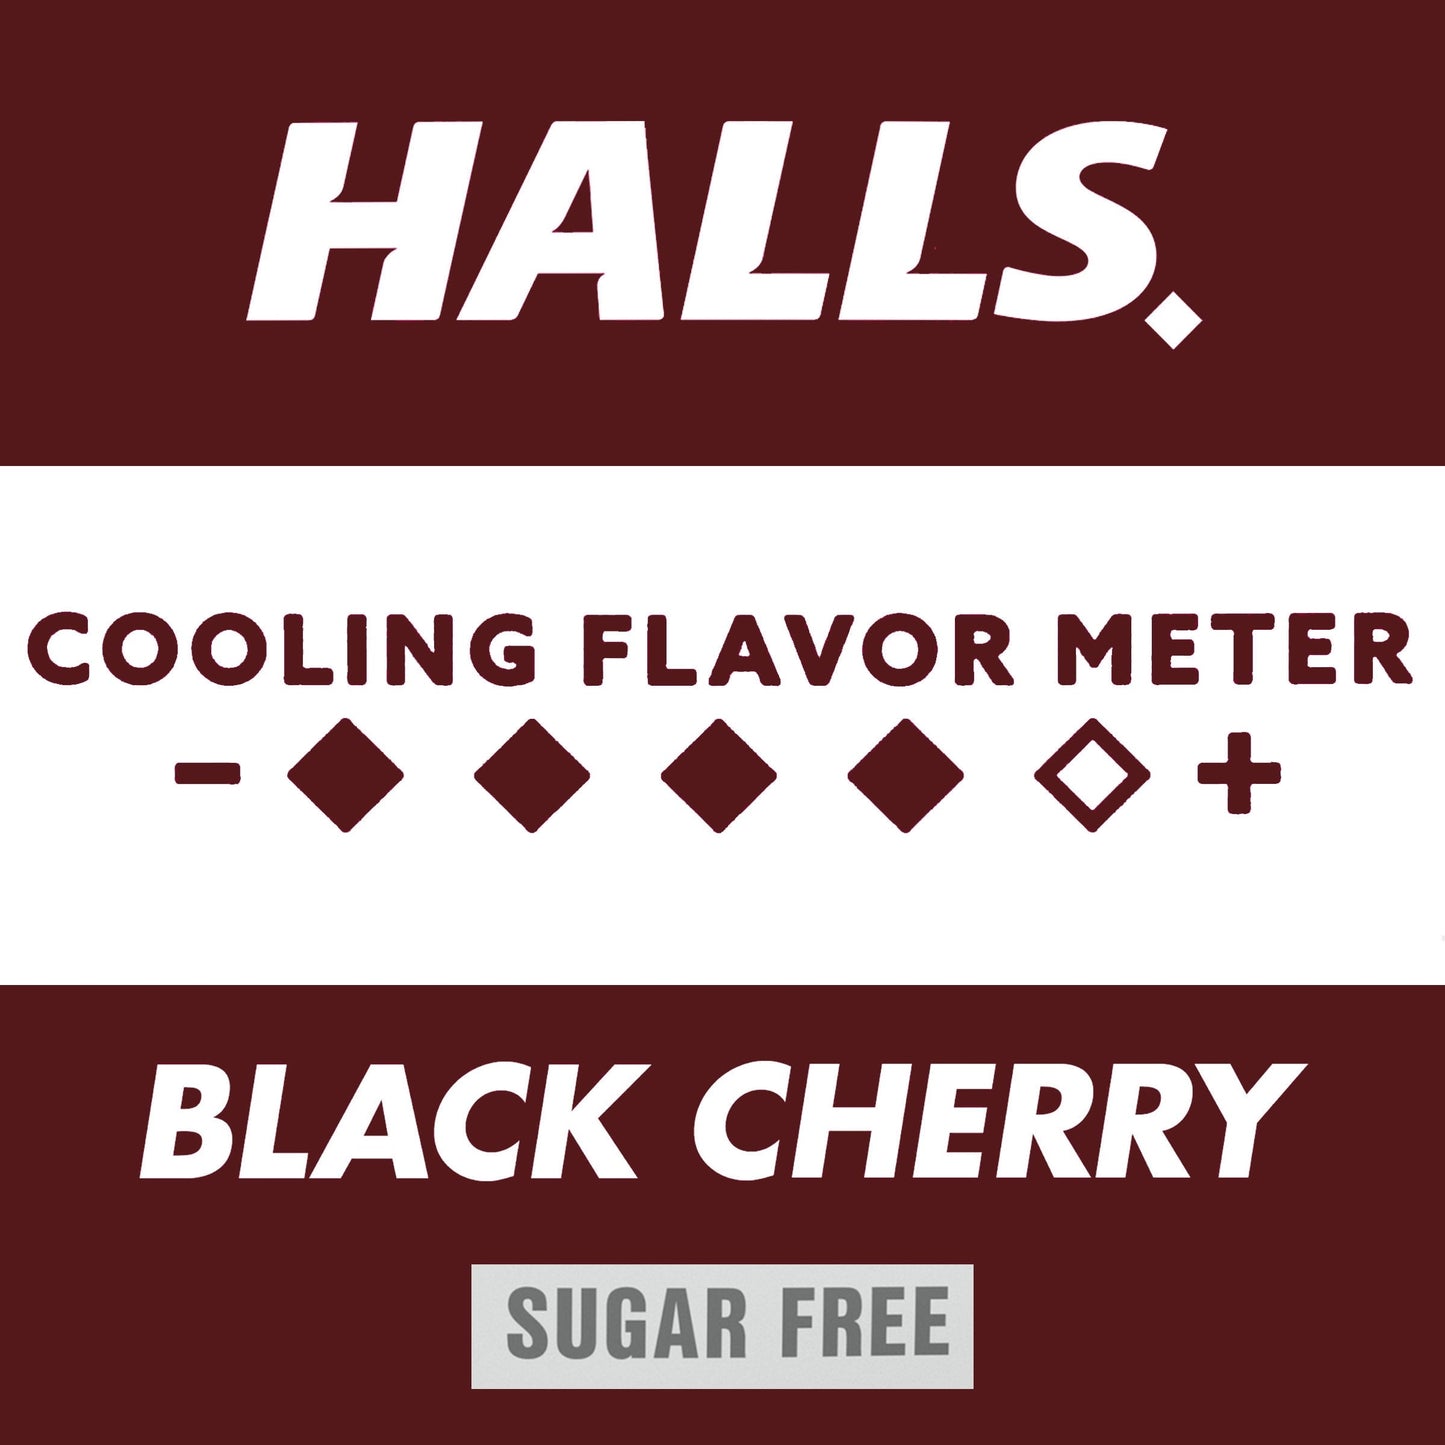 HALLS Relief Sugar Free Black Cherry Flavor Cough Drops, Economy Pack, 1 Bag (70 Drops)